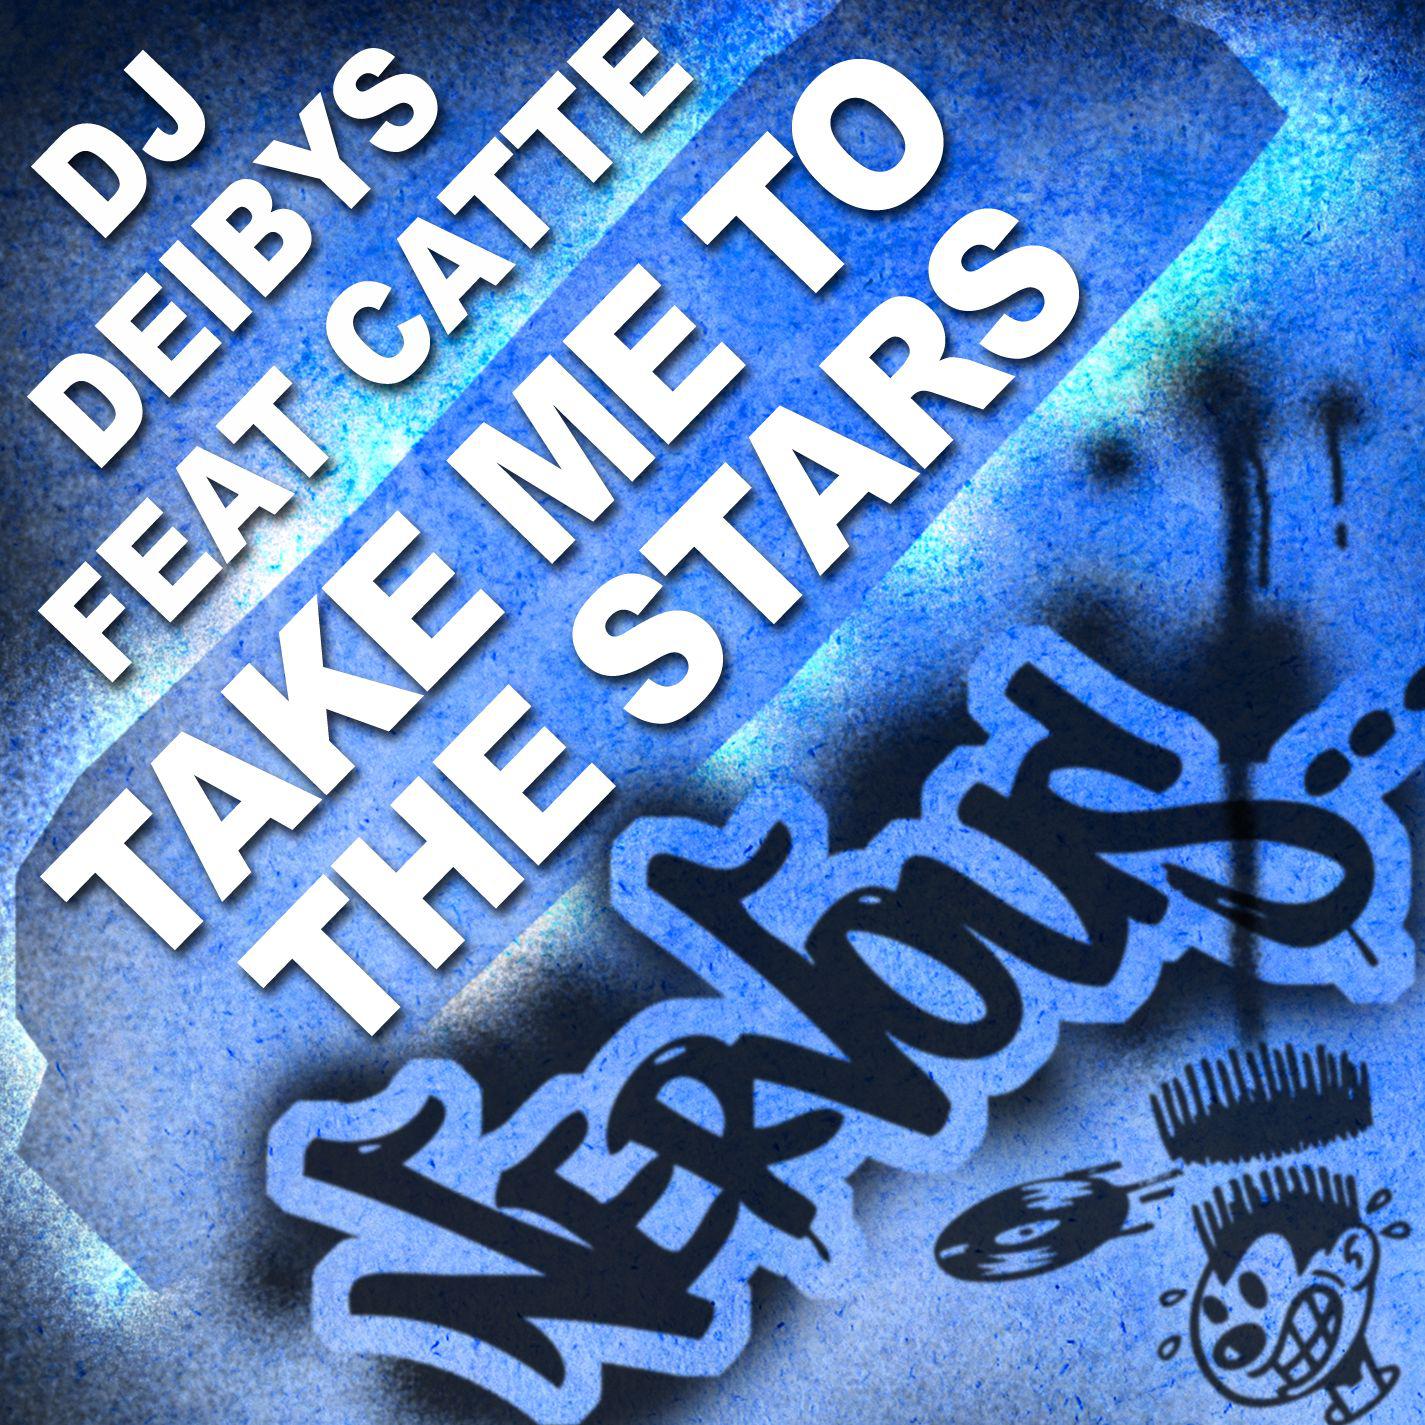 DJ Deibys - Take Me To The Stars (Original Mix)